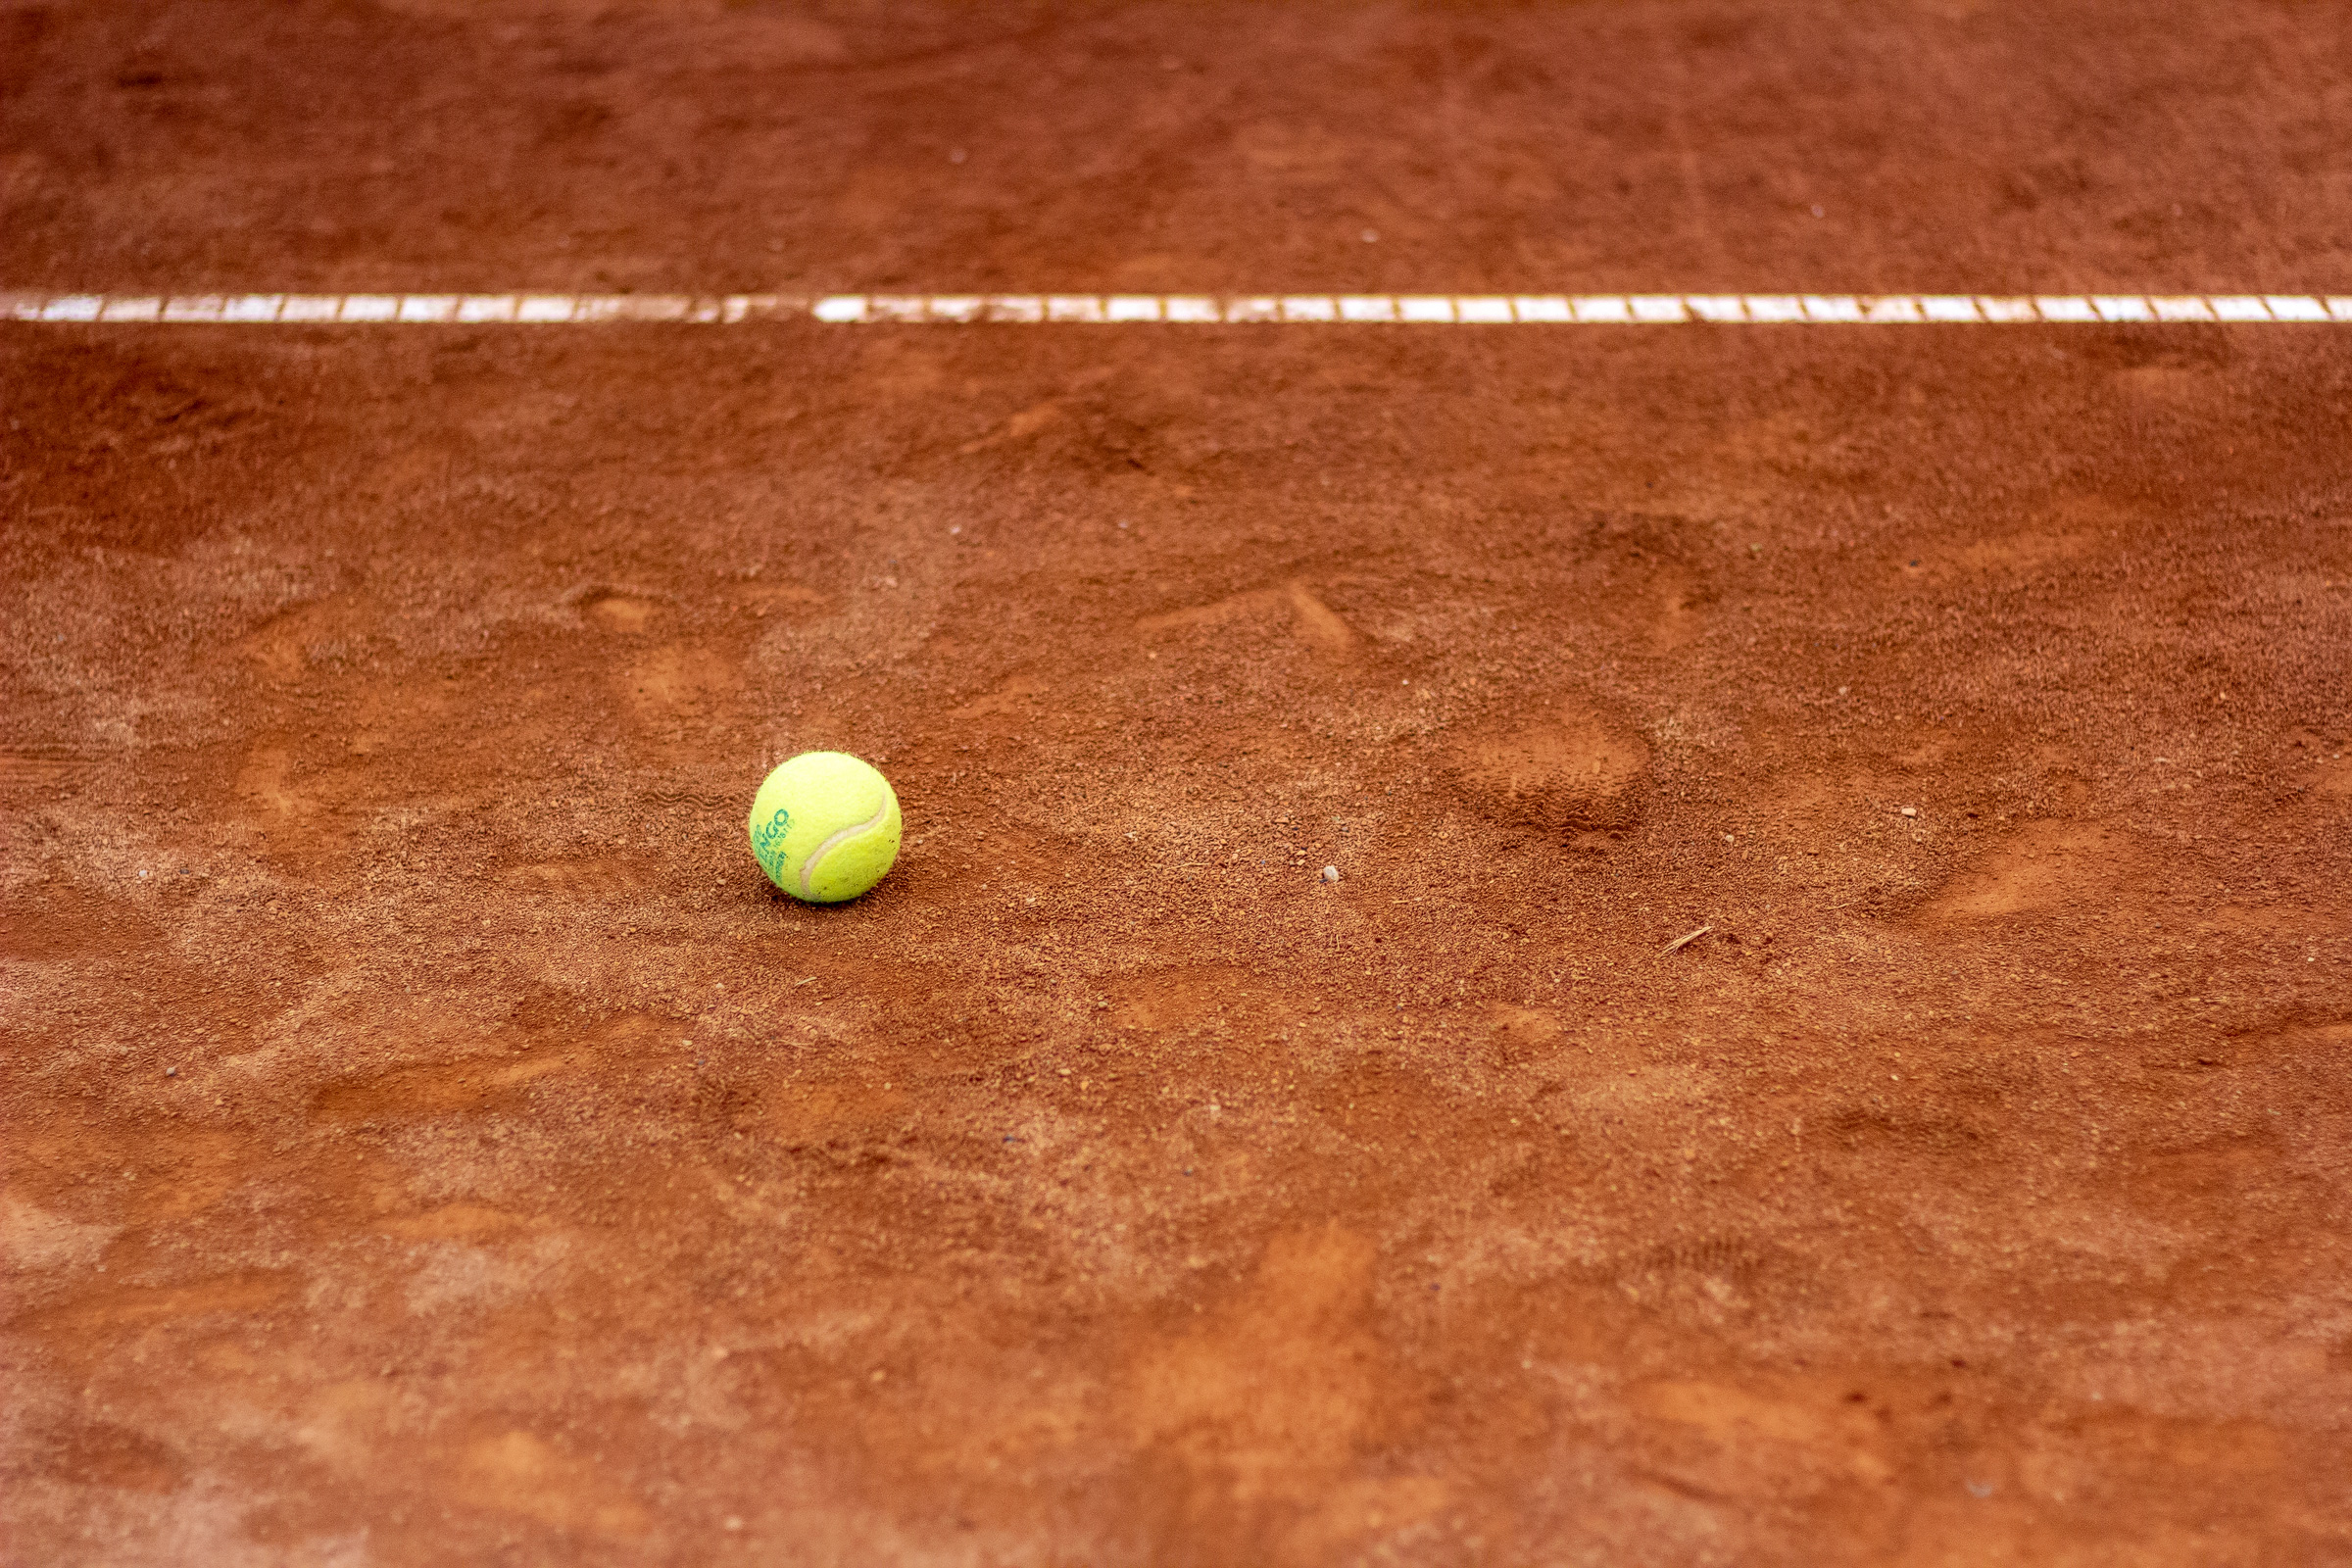 Tennis court with tennis ball